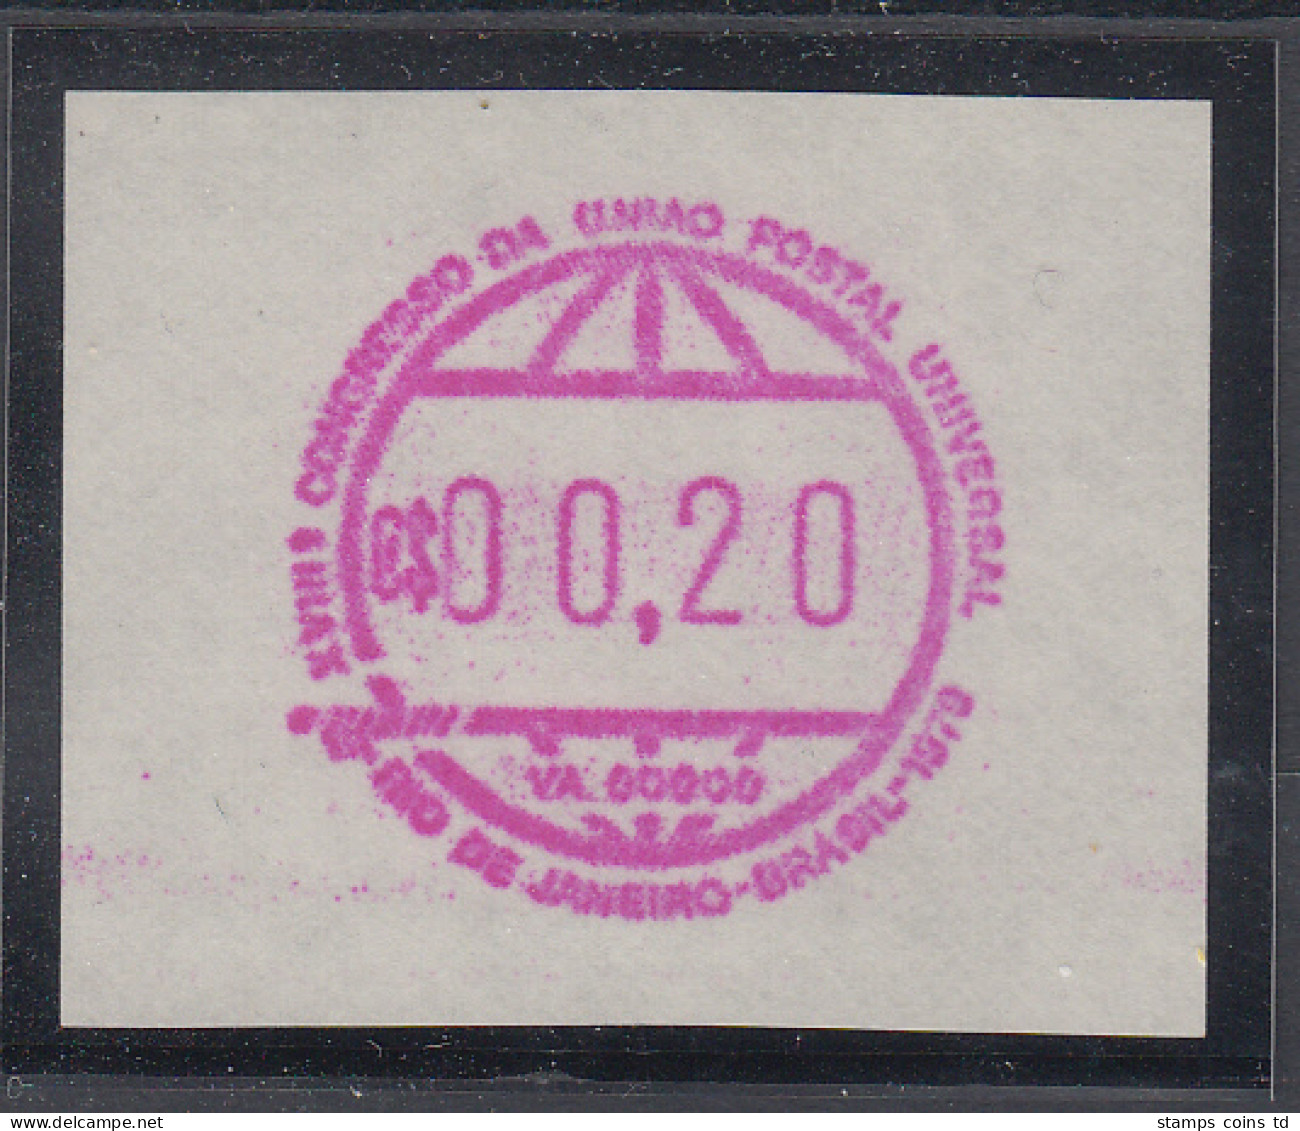 Brasilien FRAMA Sonder-ATM UPU-Kongress 1979, Wertstufe 00,20 Cr$ **, Mi.-Nr. 1 - Franking Labels